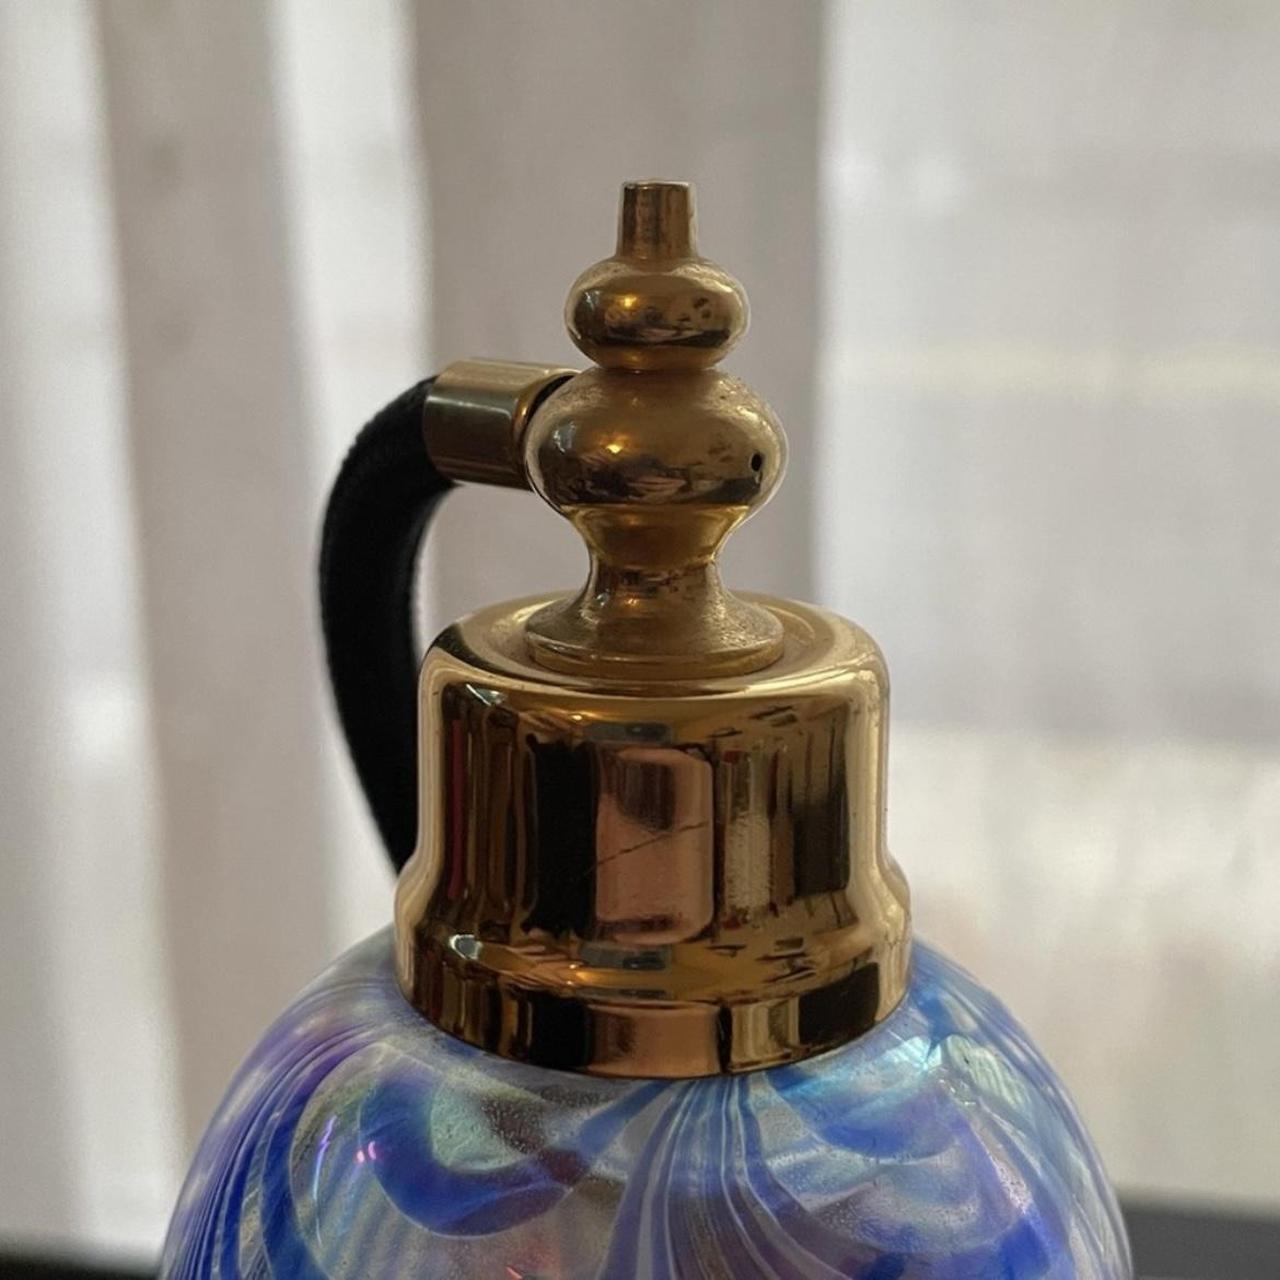 Vintage “genie” perfume bottle in amazing condition!